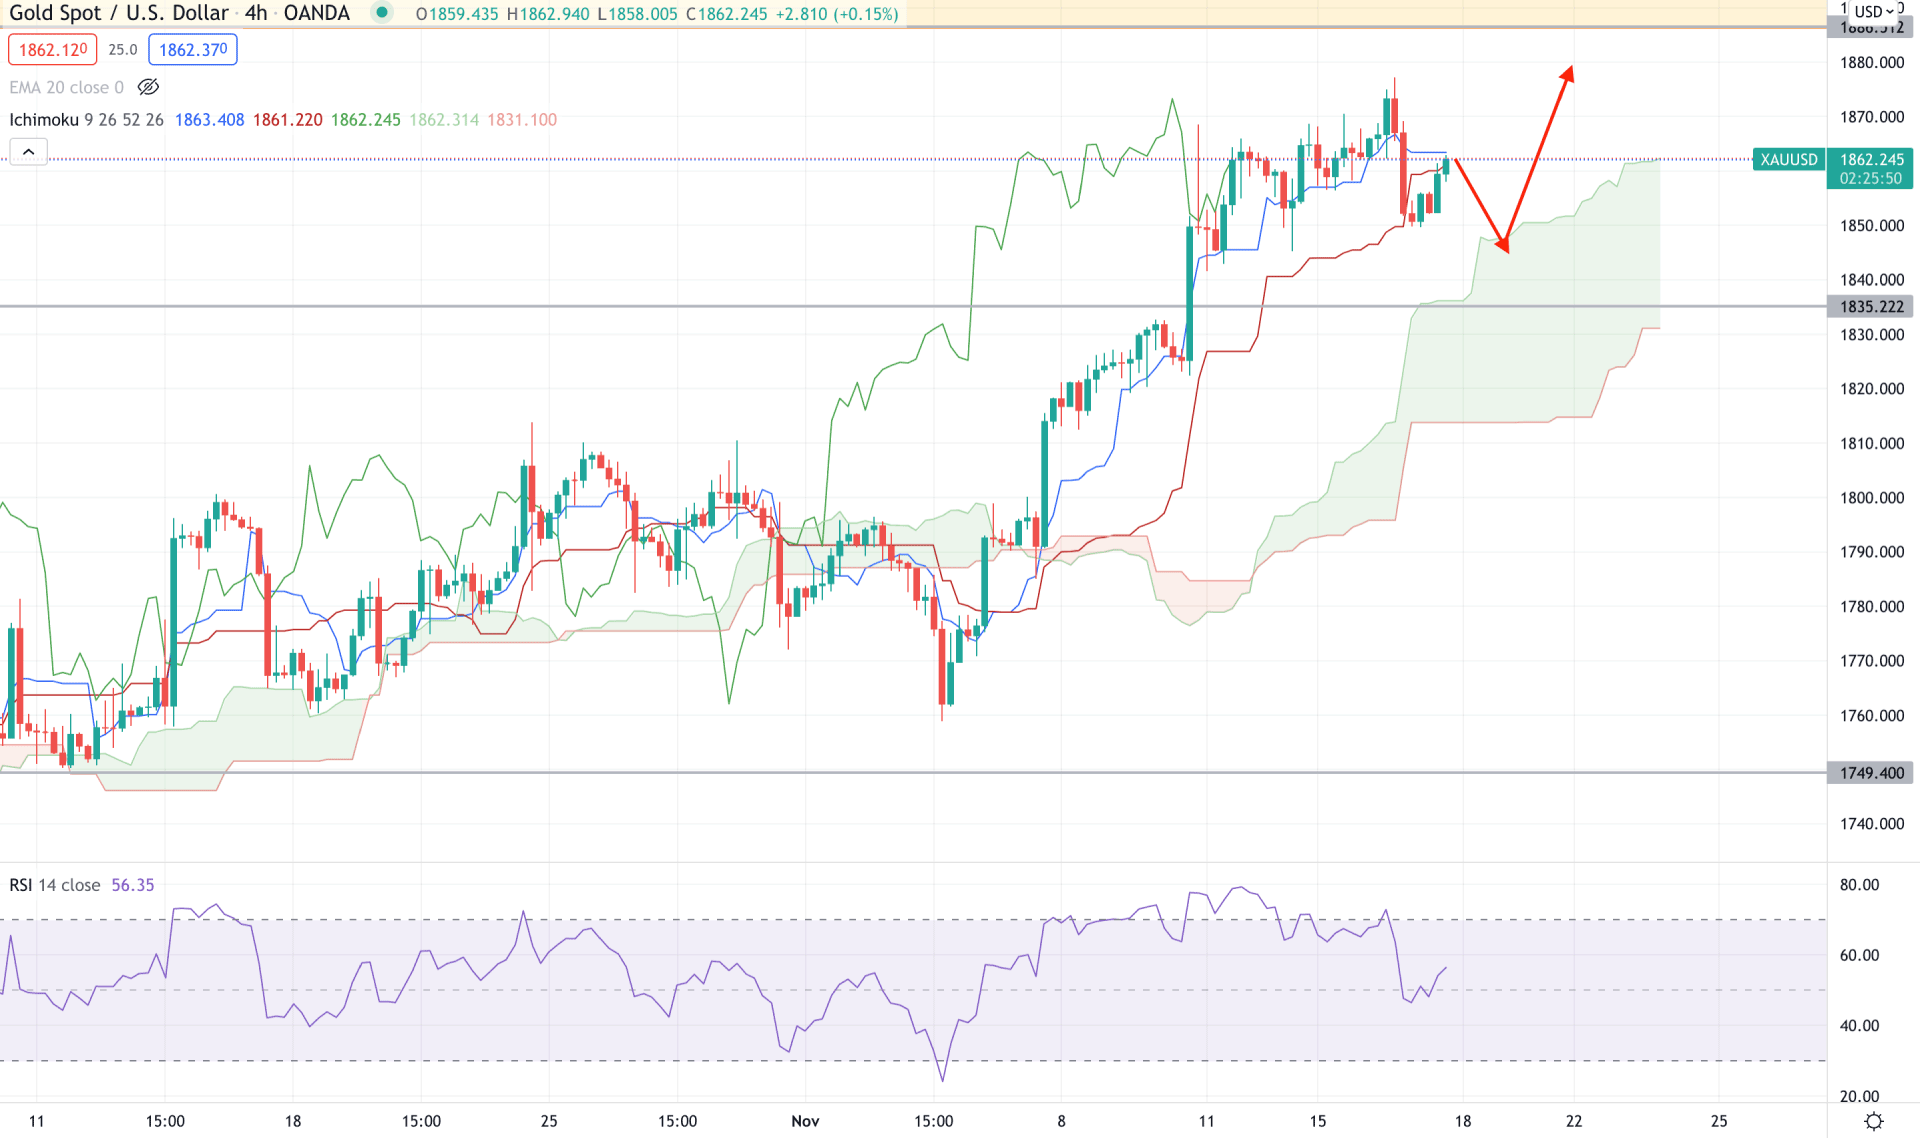 XAU/USD (Gold) H4 Technical Analysis 17th November 2021